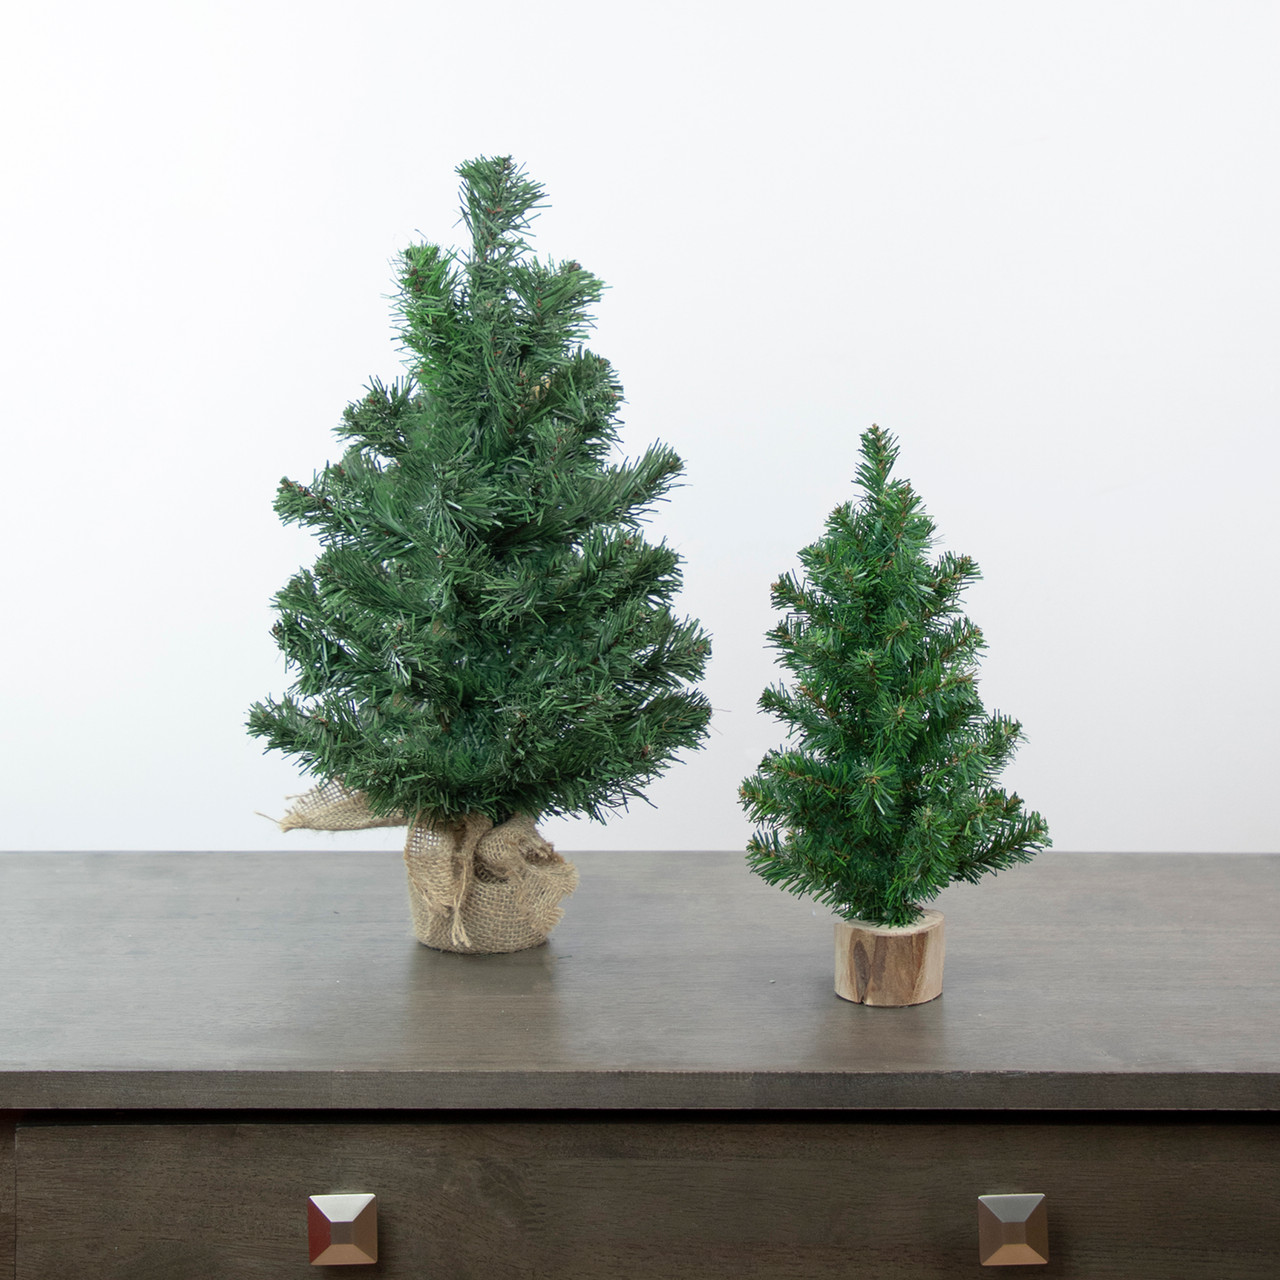 Mini Christmas Pine Artificial Christmas Trees with Burlap Base